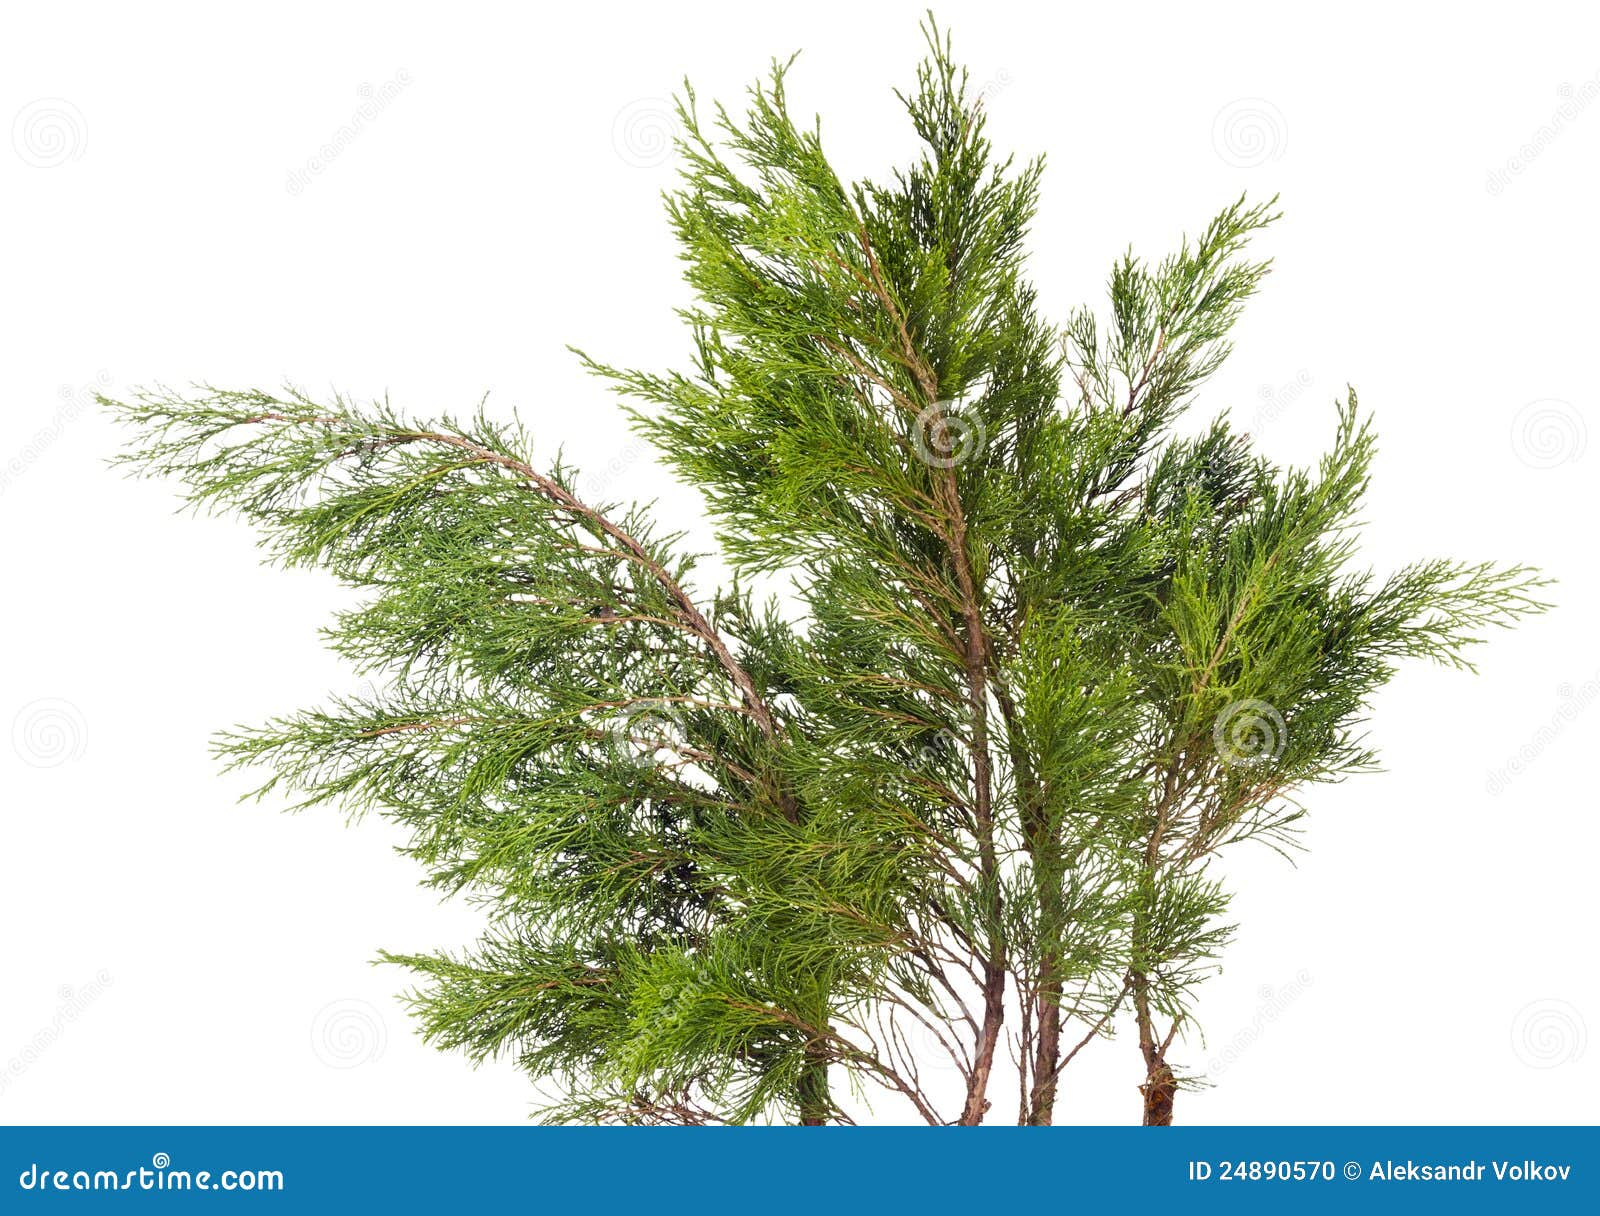 clip art juniper tree - photo #49